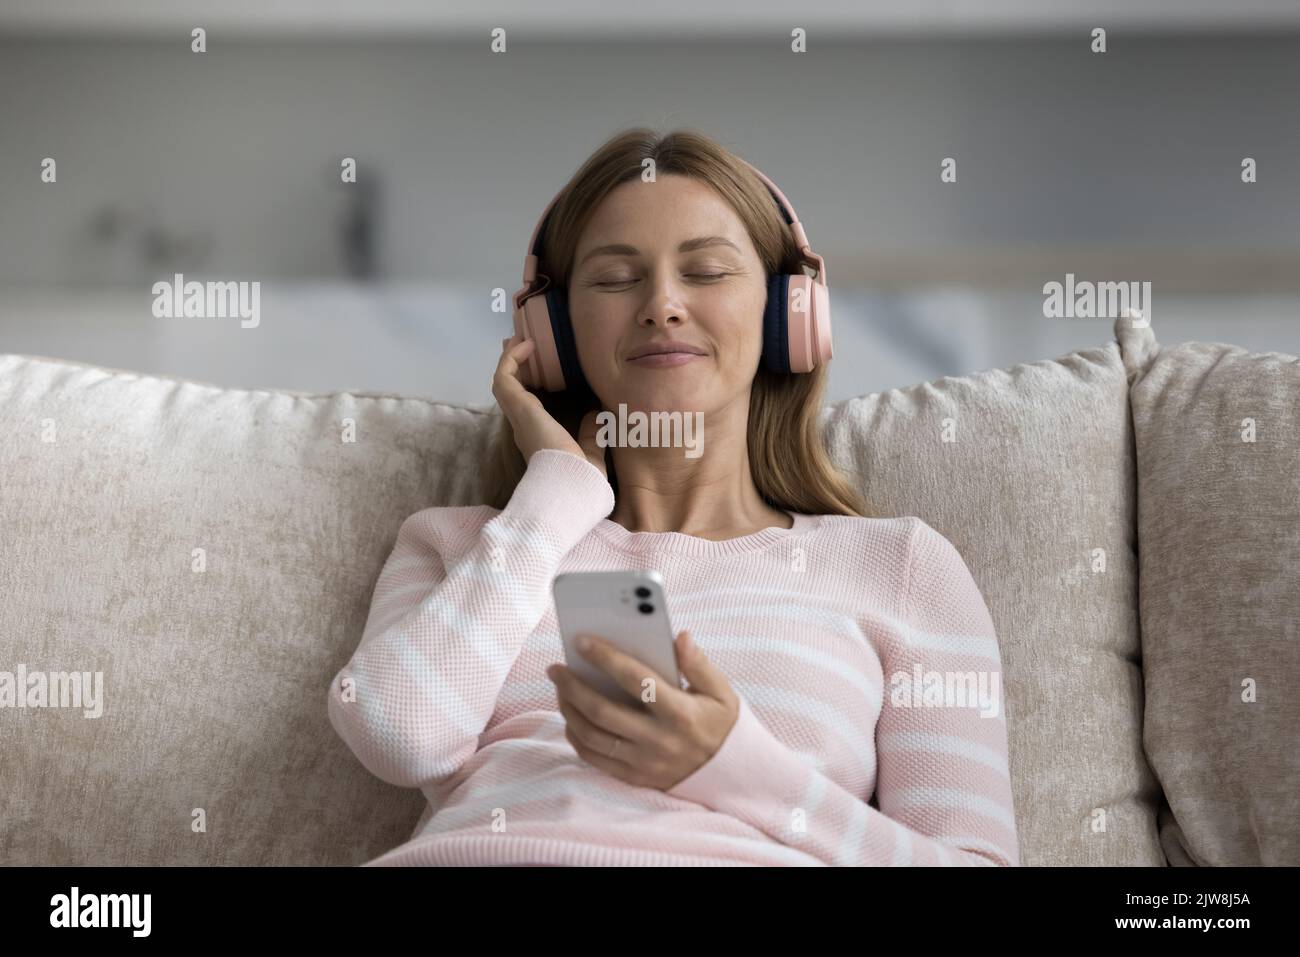 Cheerful woman in big wireless pink headphones holding smartphone Stock Photo